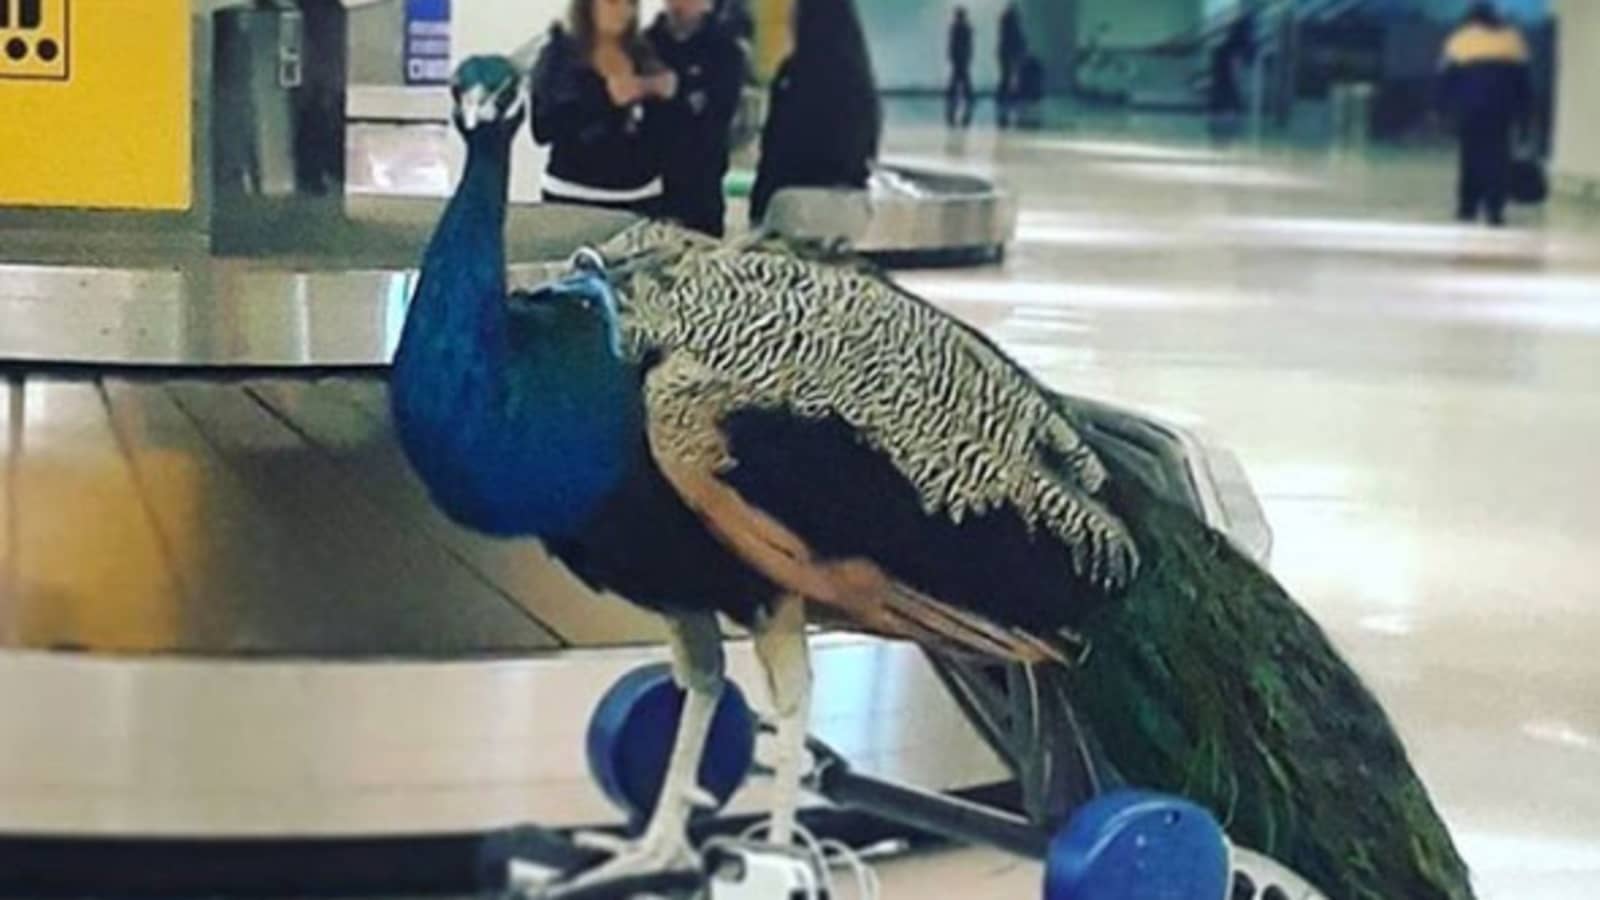 contact peacocks customer service